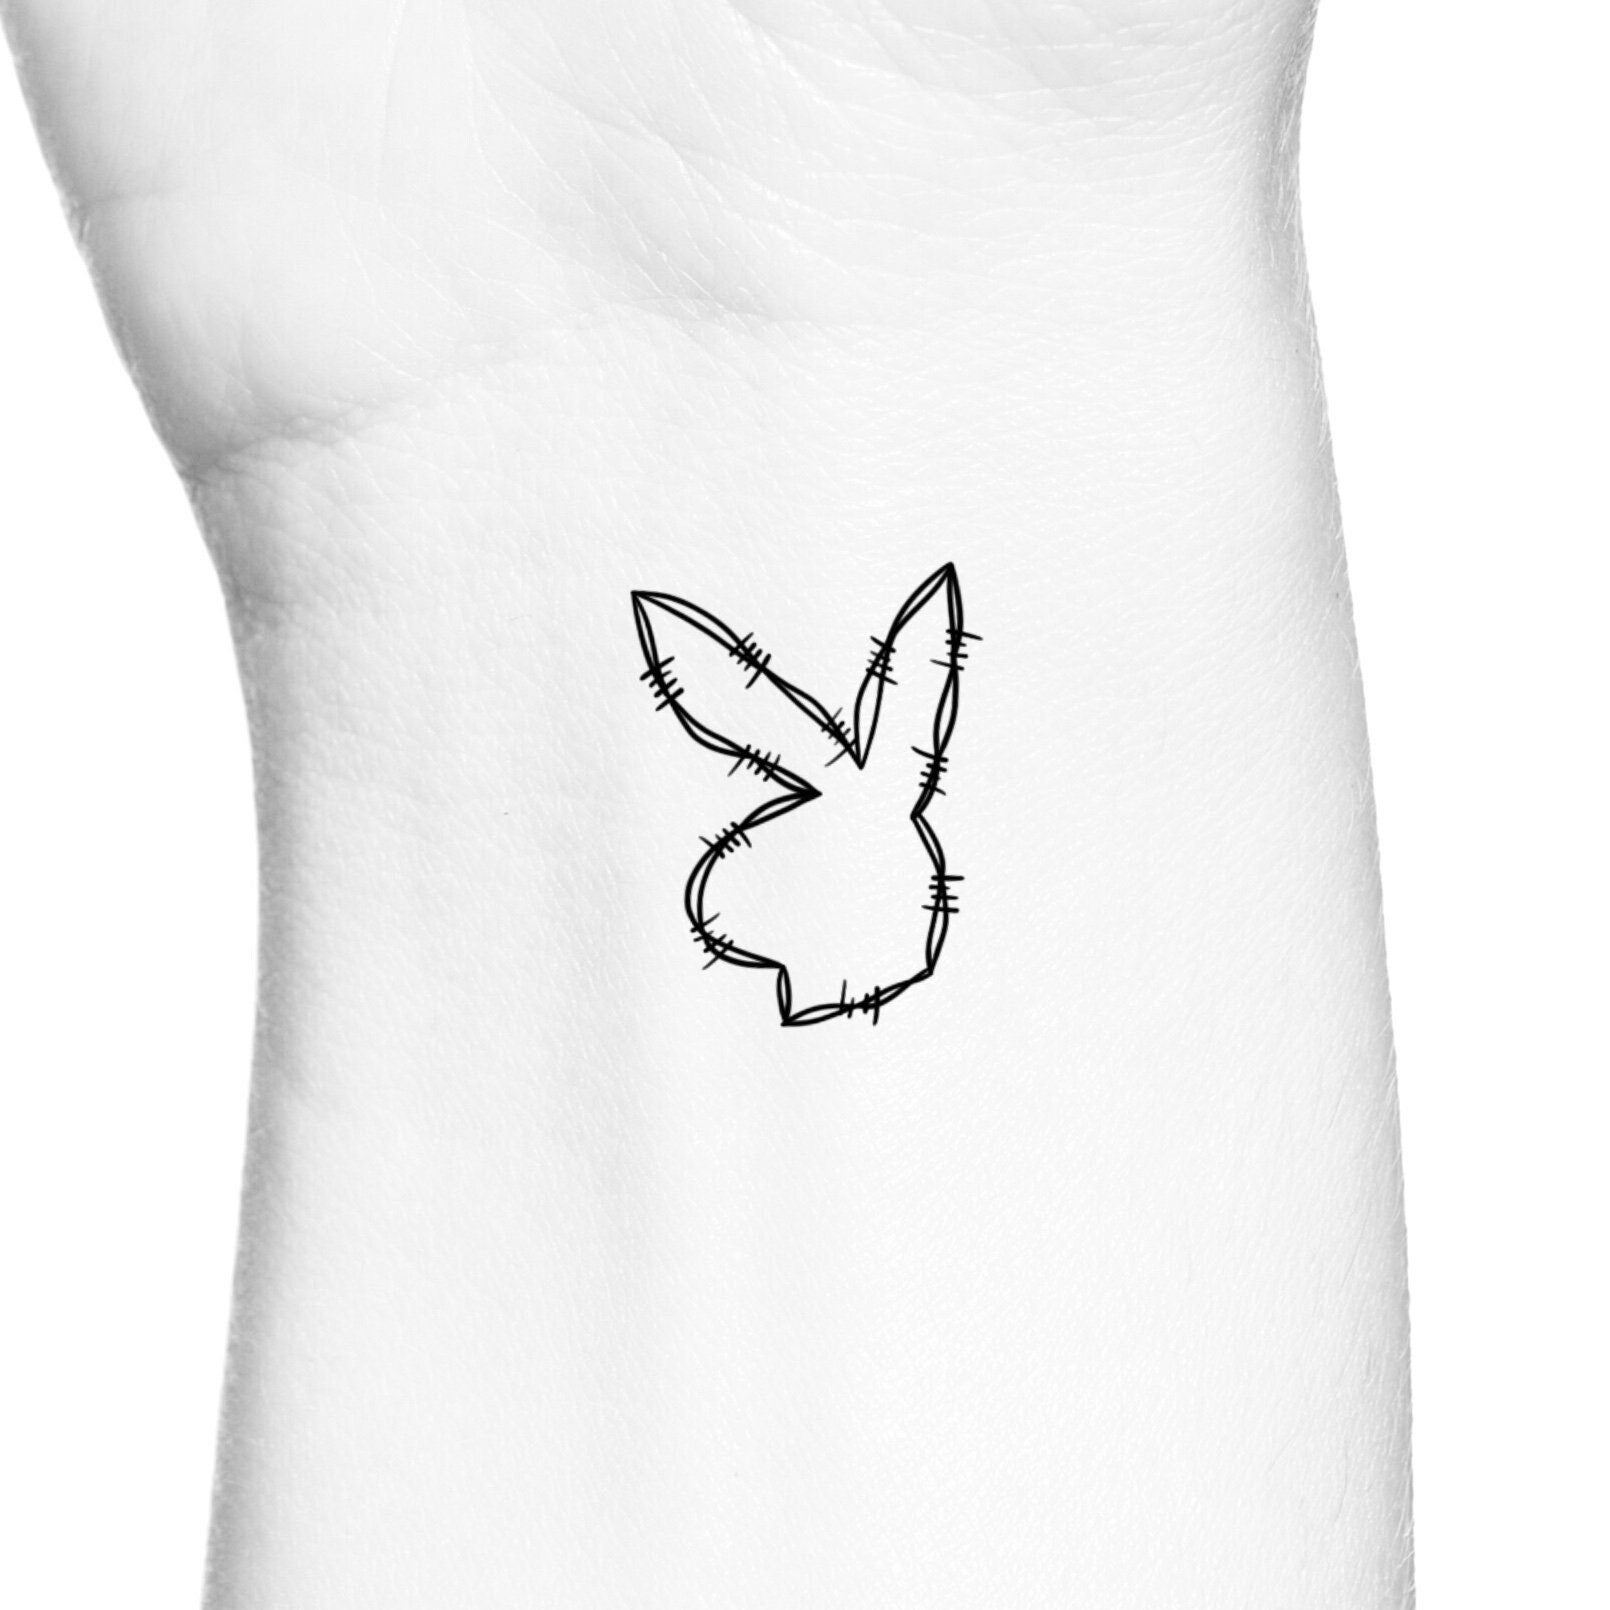 Playboy Bunny Tattoo Ideas - TattooTab